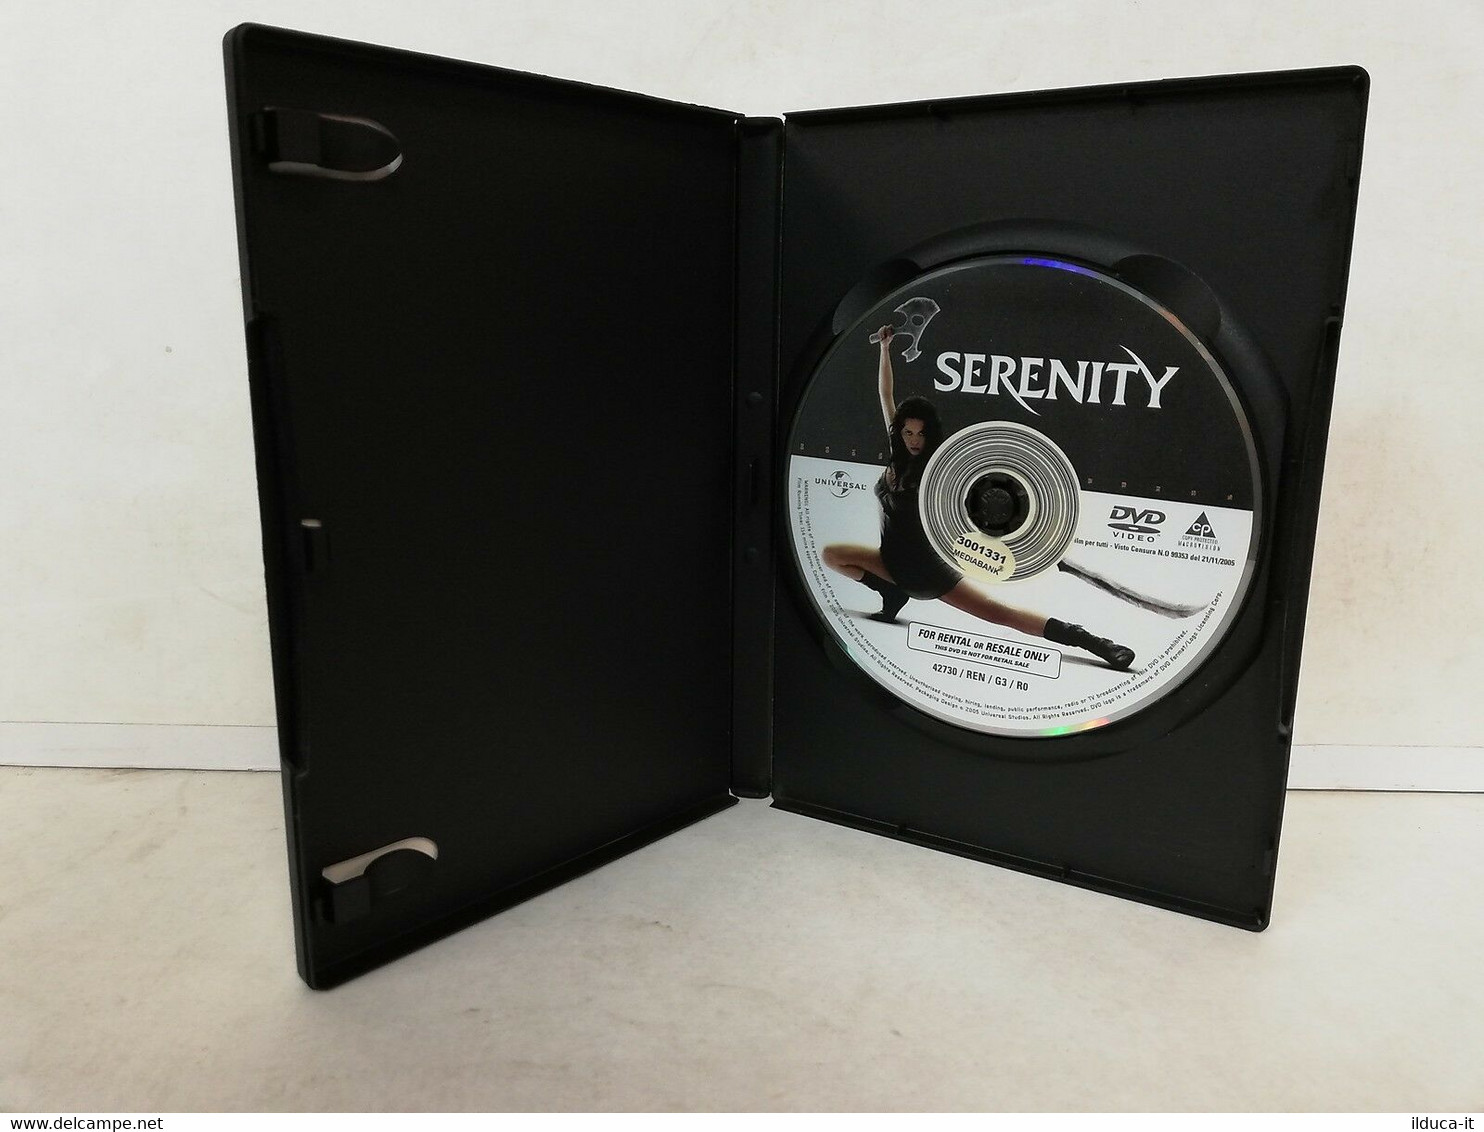 00999 DVD - SERENITY - Nathan Fillion, Gina Torres, Alan Tudyk - USA 2005 - Science-Fiction & Fantasy